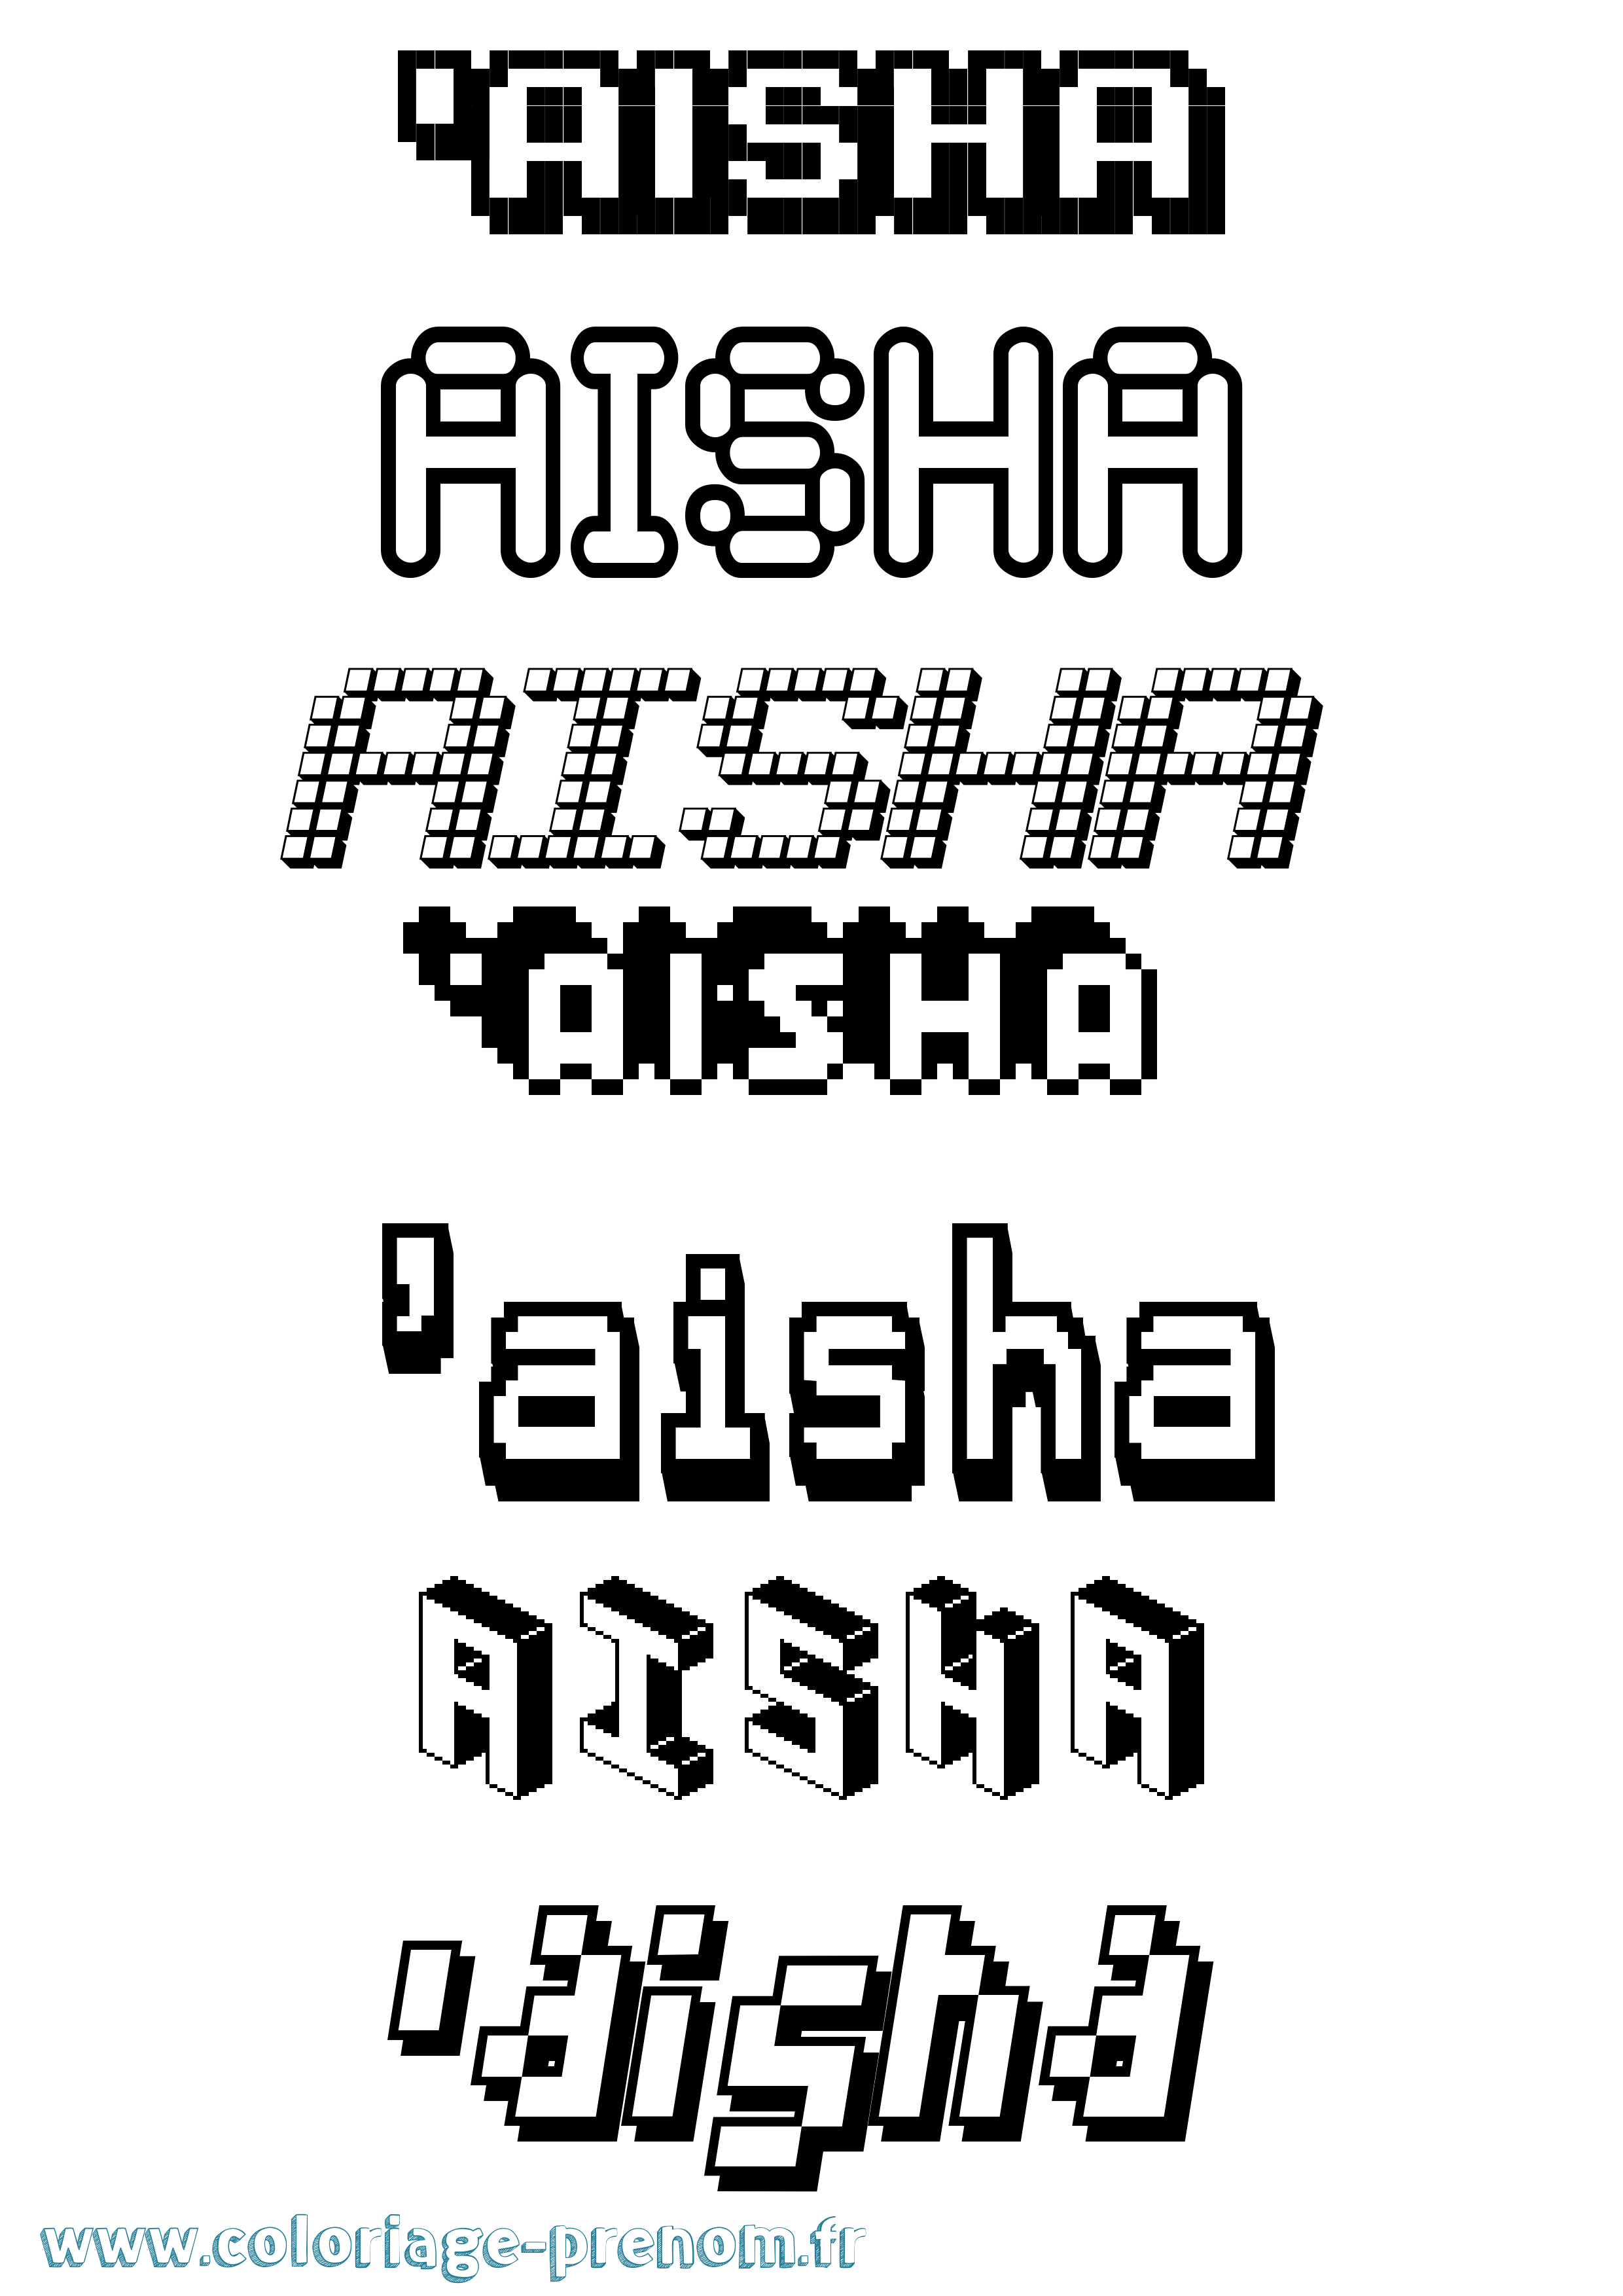 Coloriage prénom 'Aisha Pixel